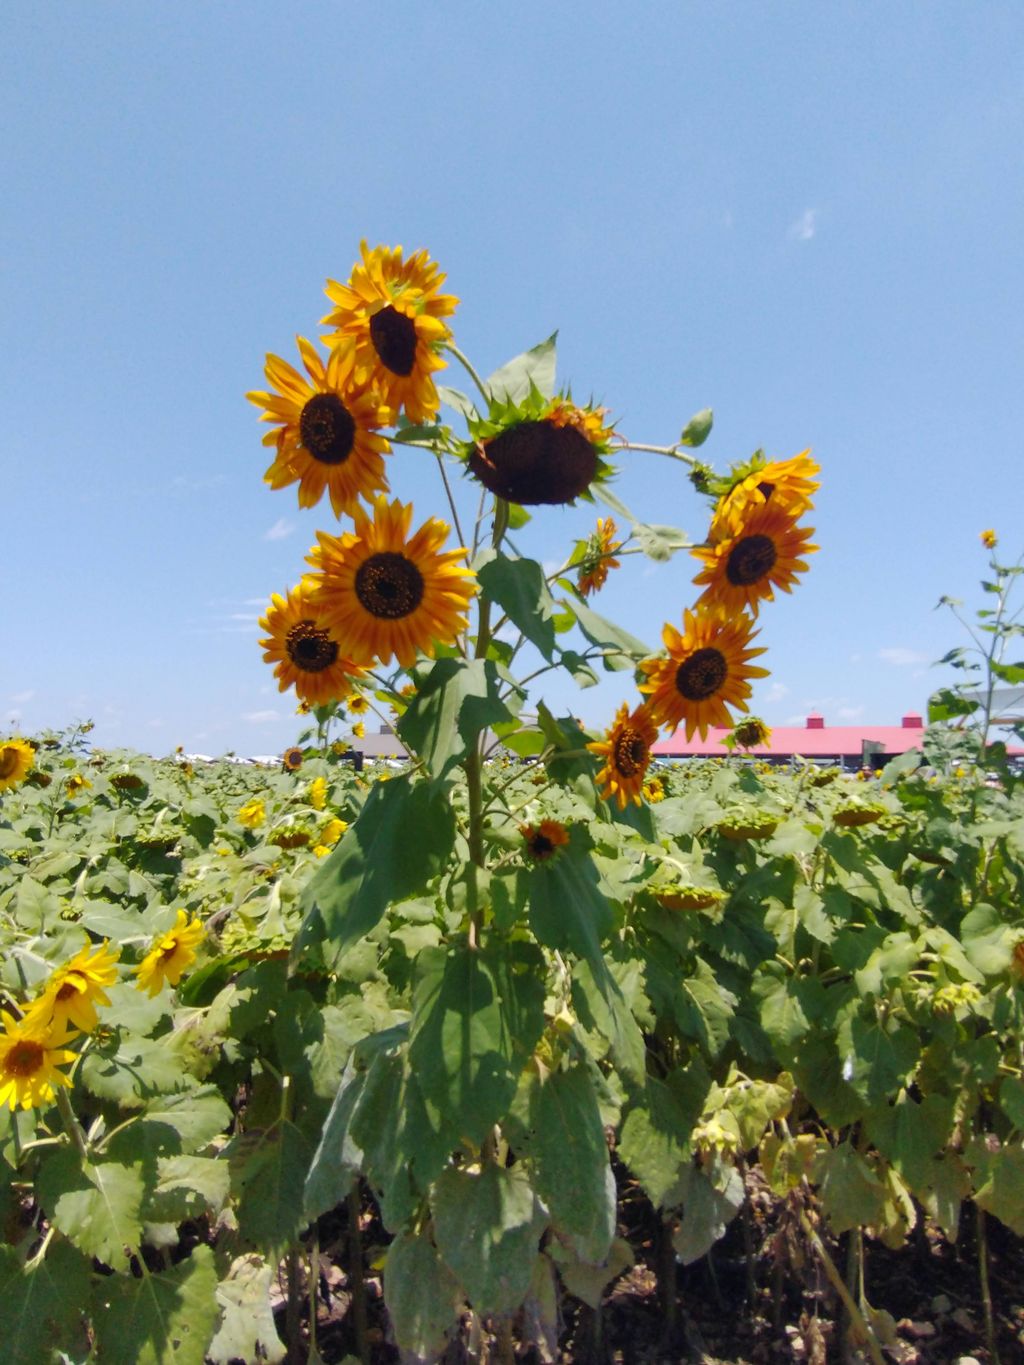 Sunflower-Field